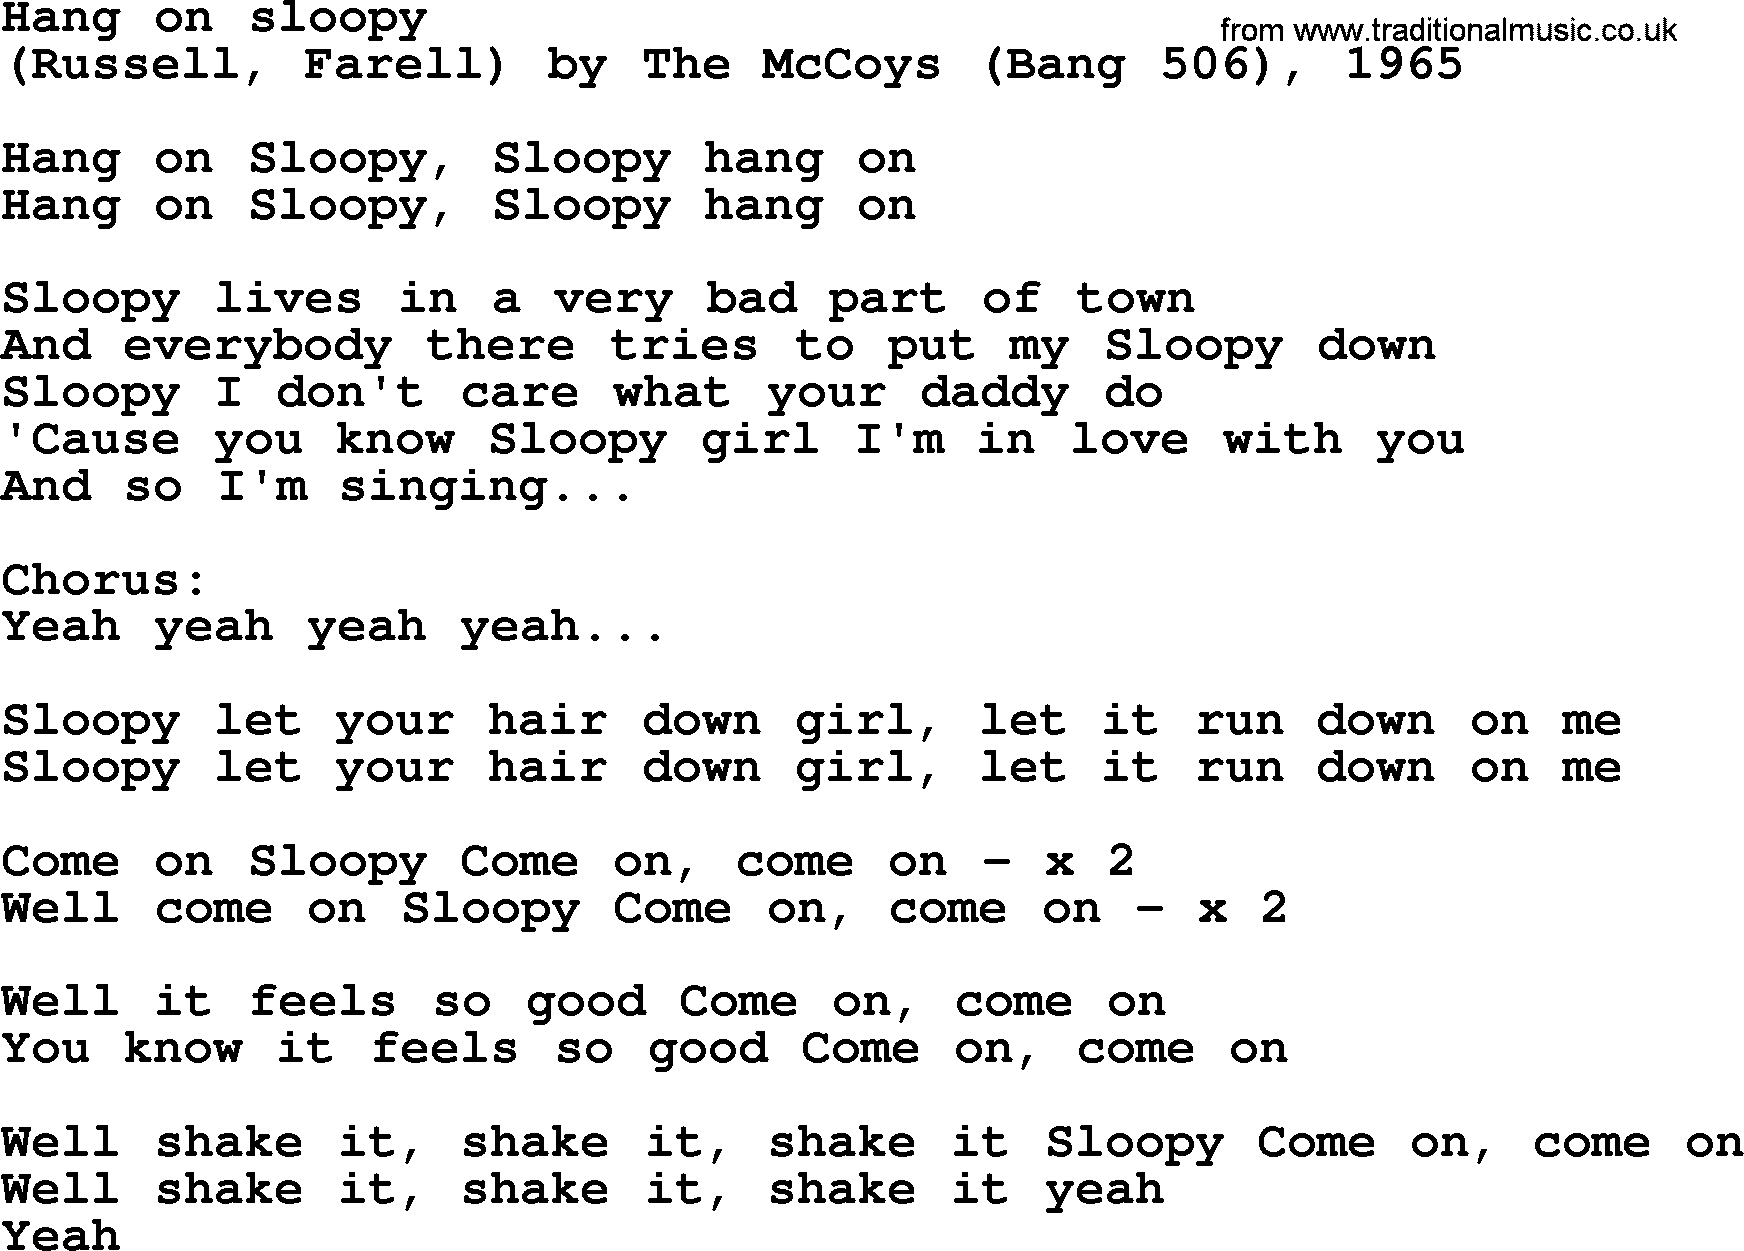 Bruce Springsteen song: Hang On Sloopy lyrics